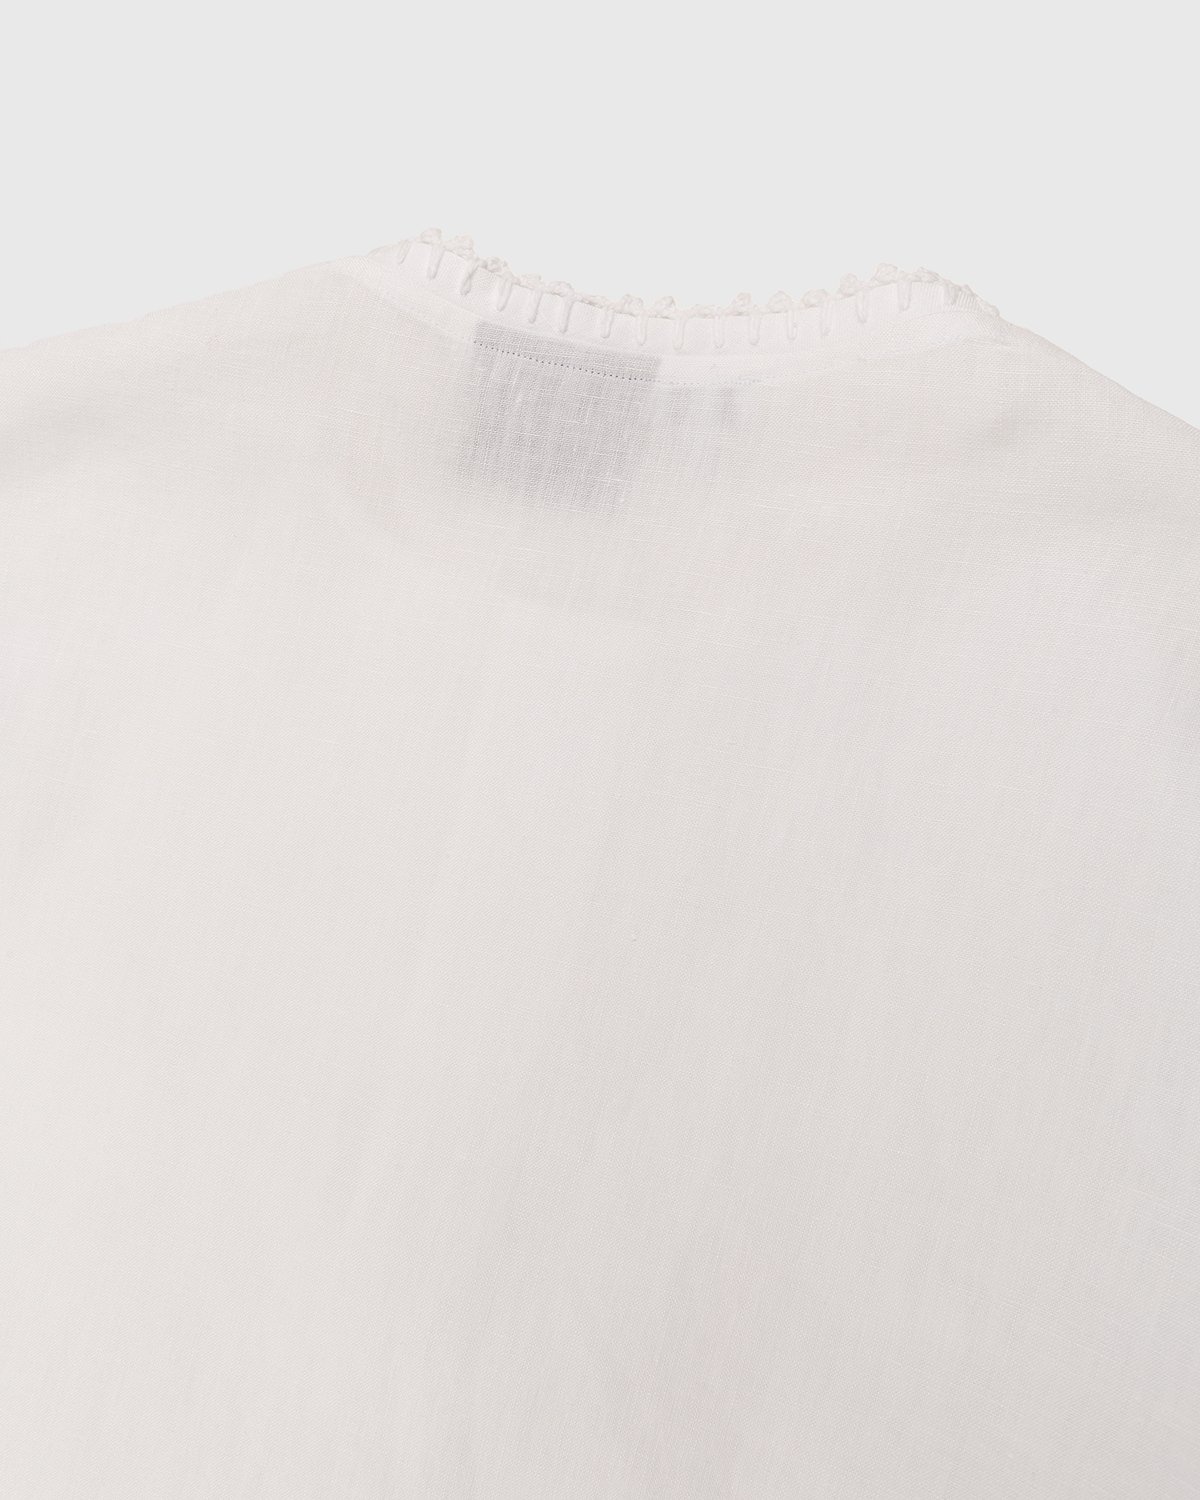 Loewe – Paula's Ibiza Buttoned Pullover Shirt White - Longsleeves - White - Image 3